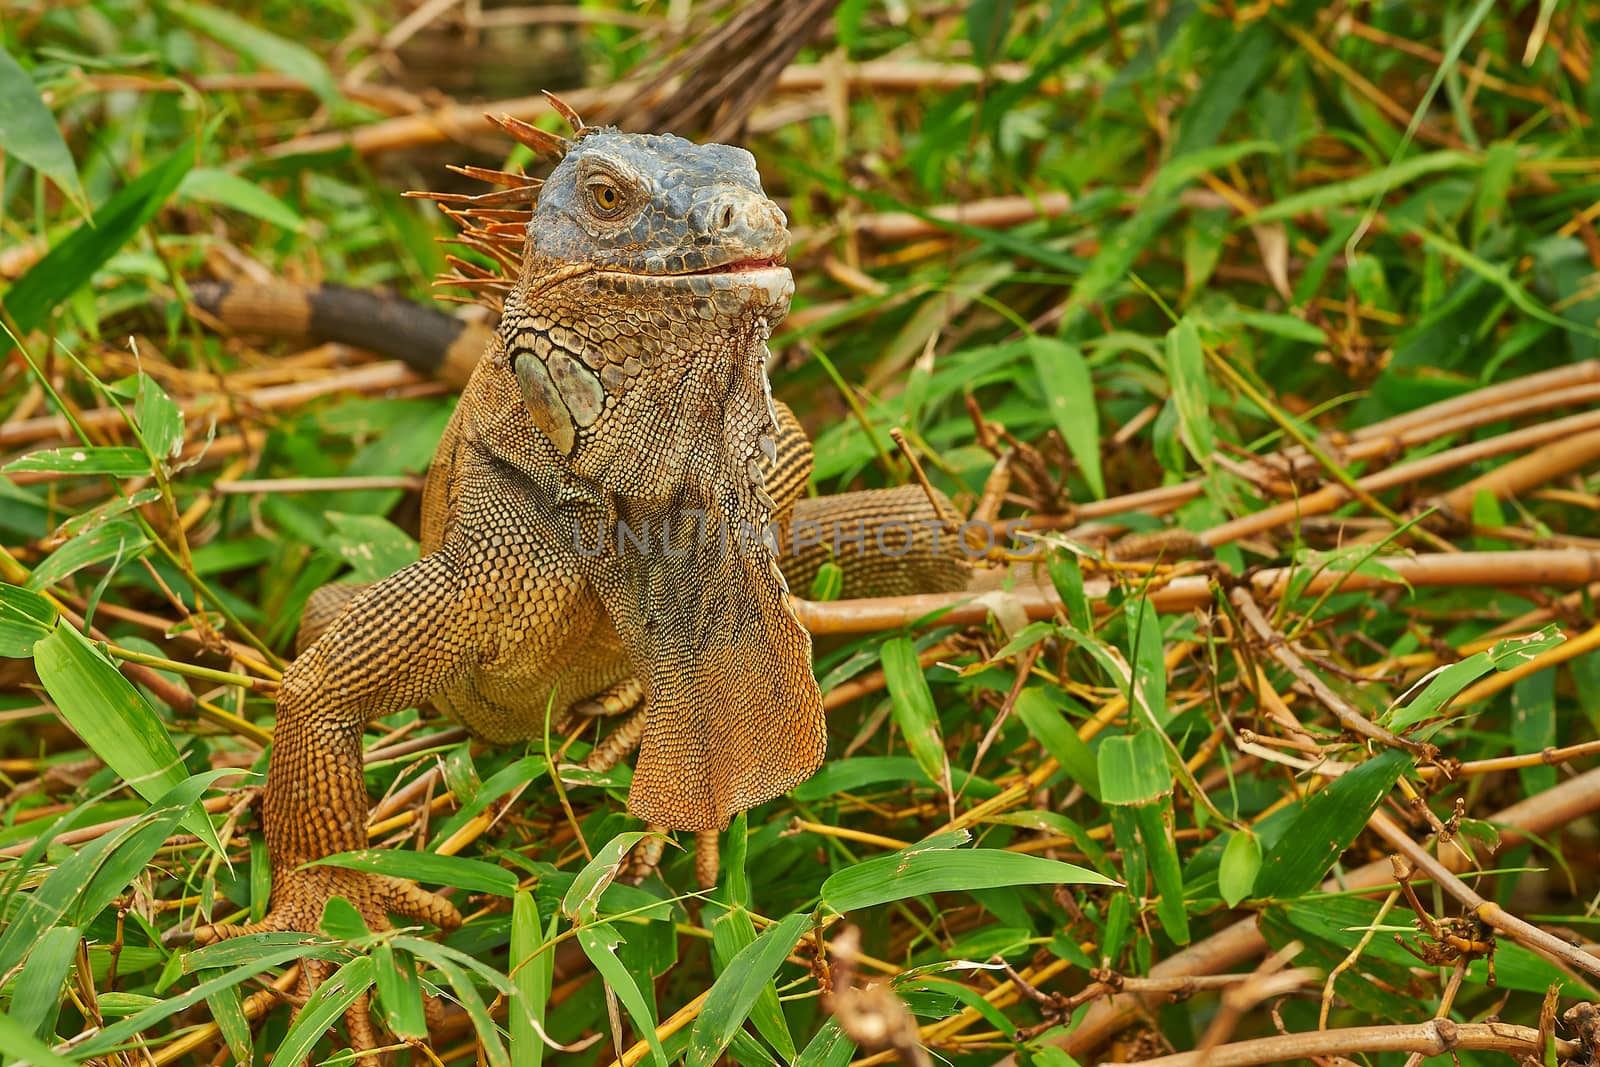 Closeup of a green iguana basking in a tree.